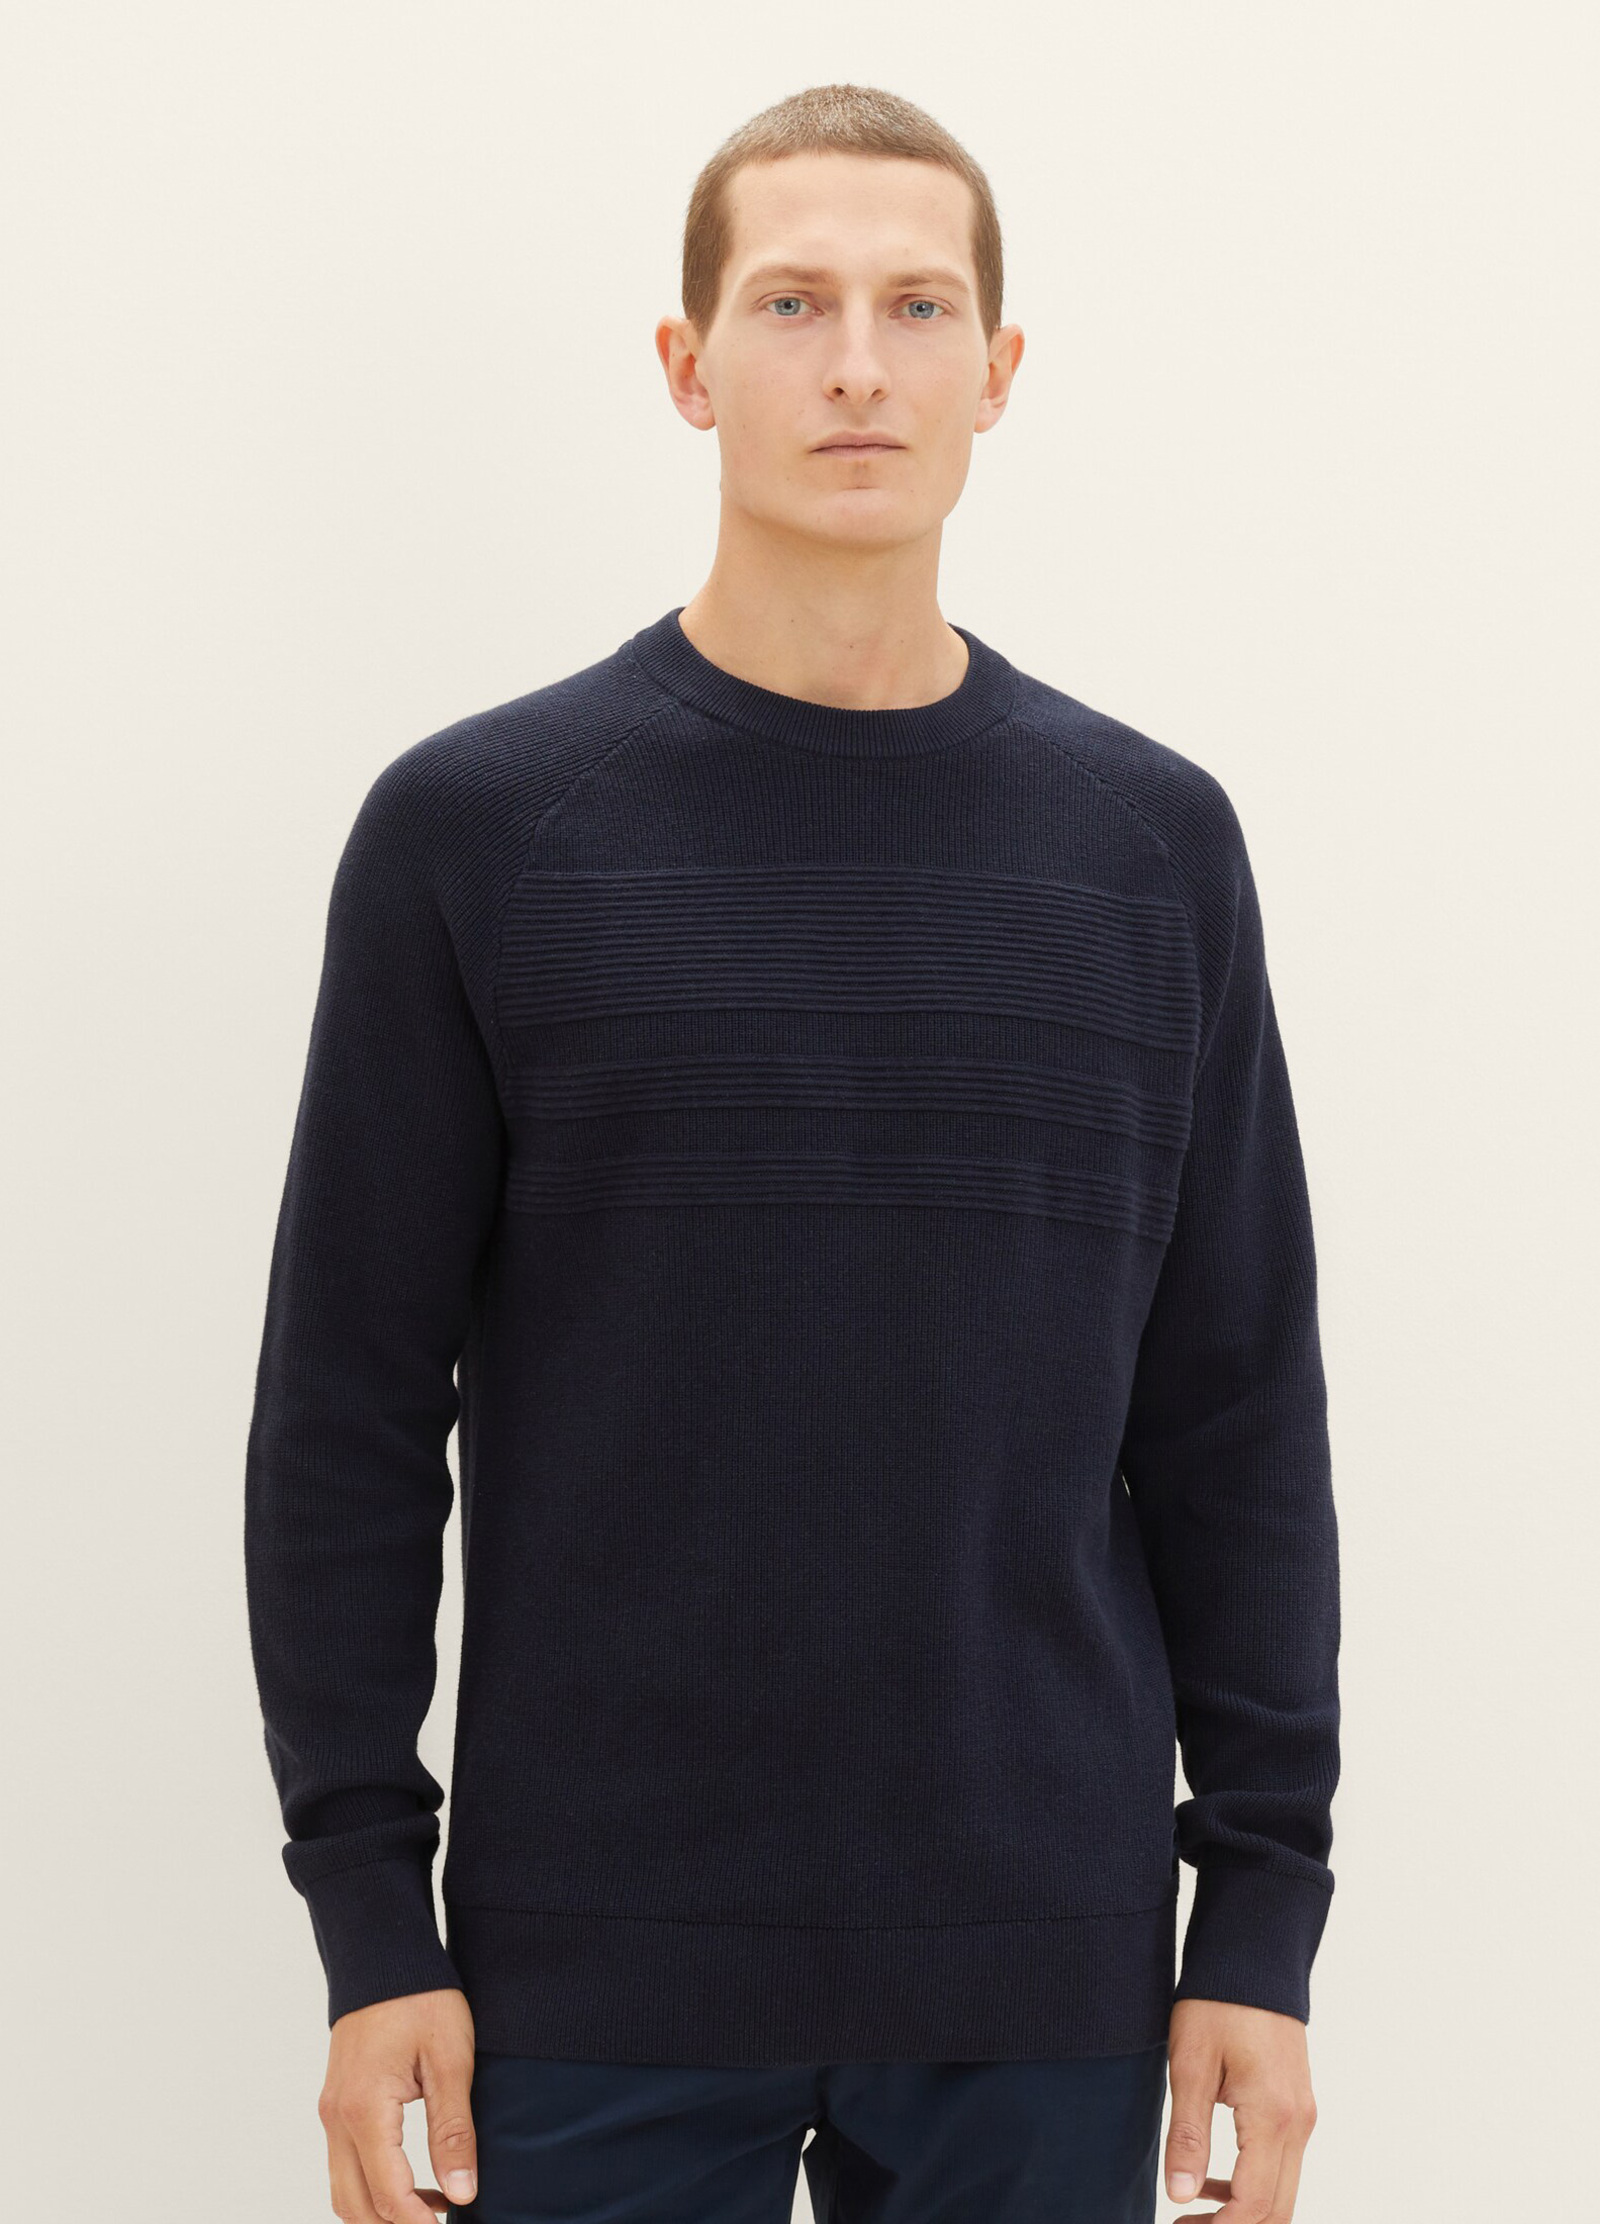 Pullover Melange - Tom Knitted Navy XL Size Tailor®